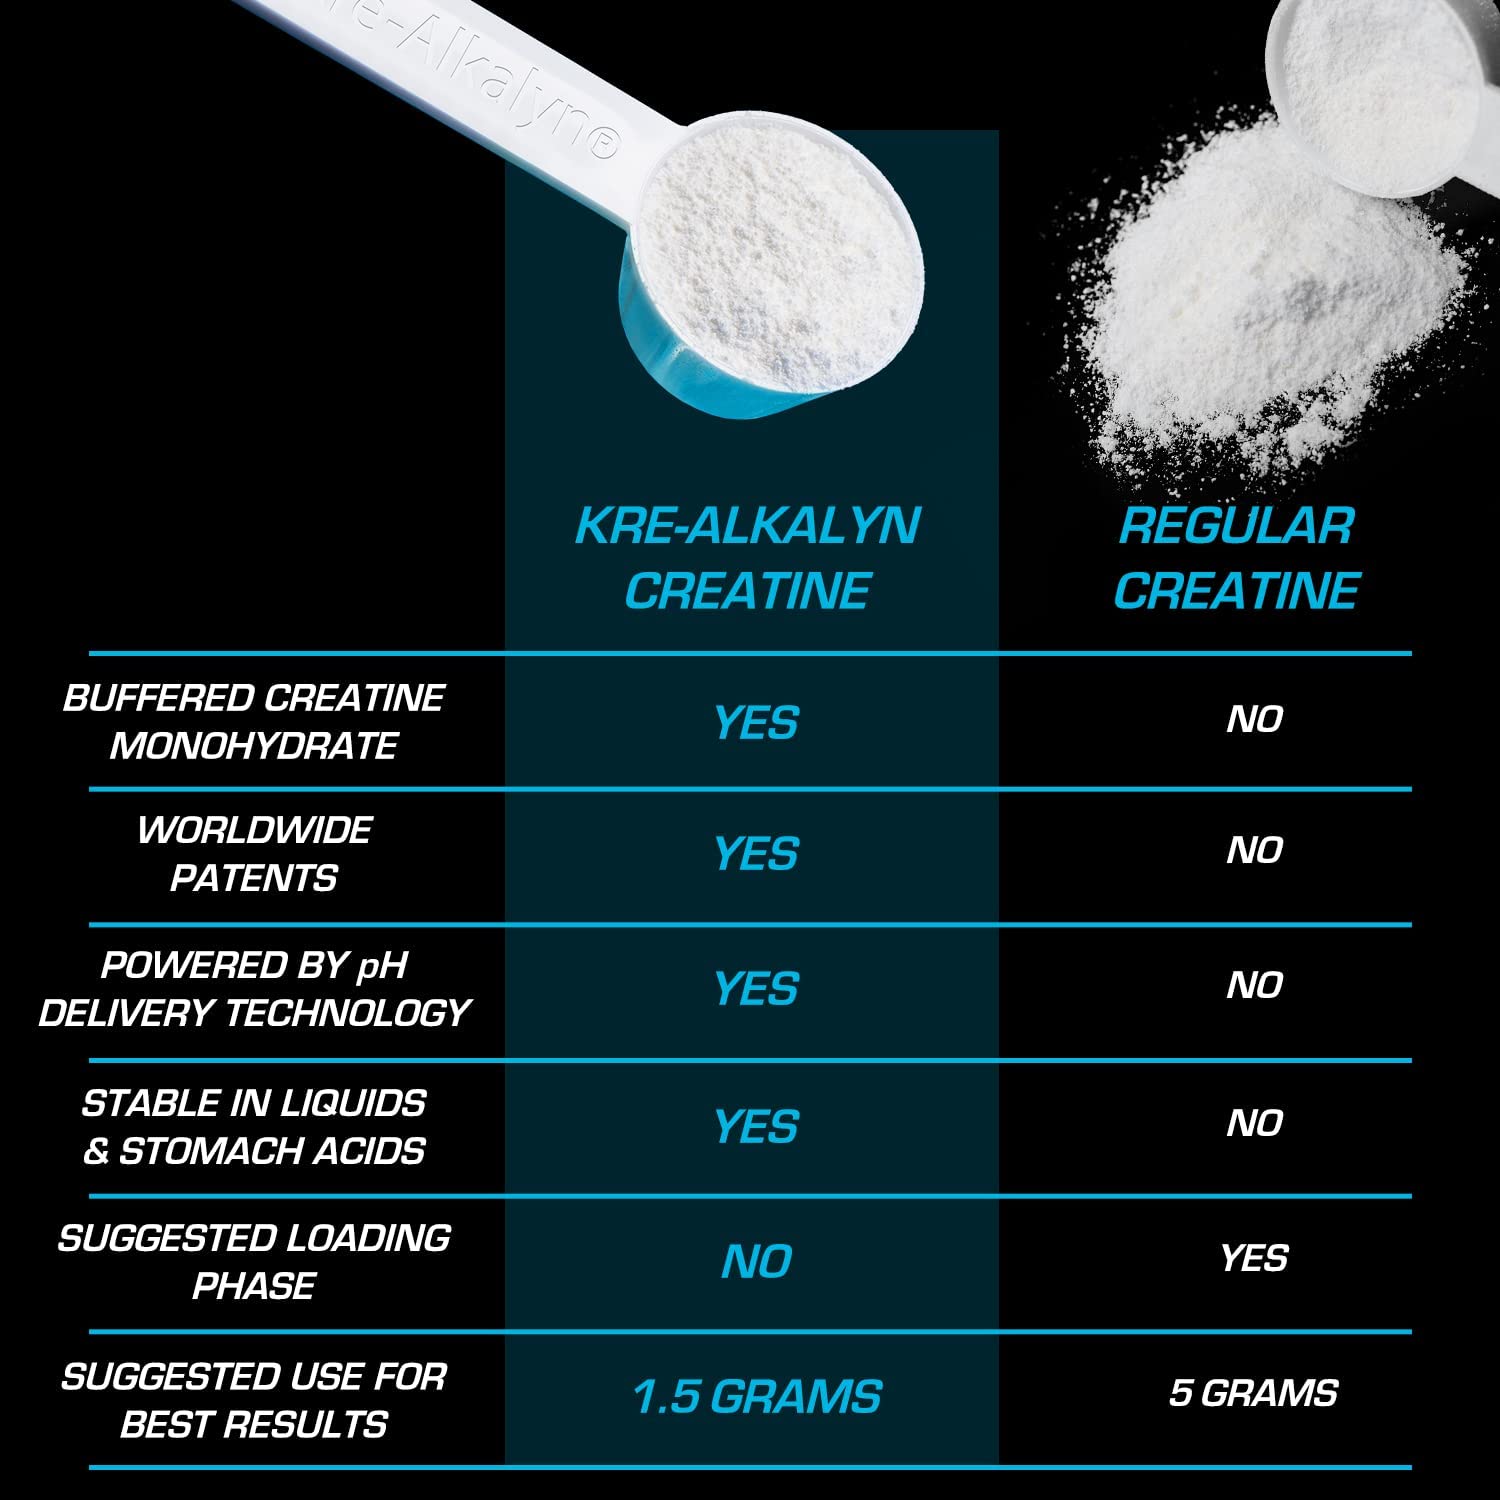 EFX Sports | Kre-Alkalyn Powder | PH-Correct Creatine Monohydrate